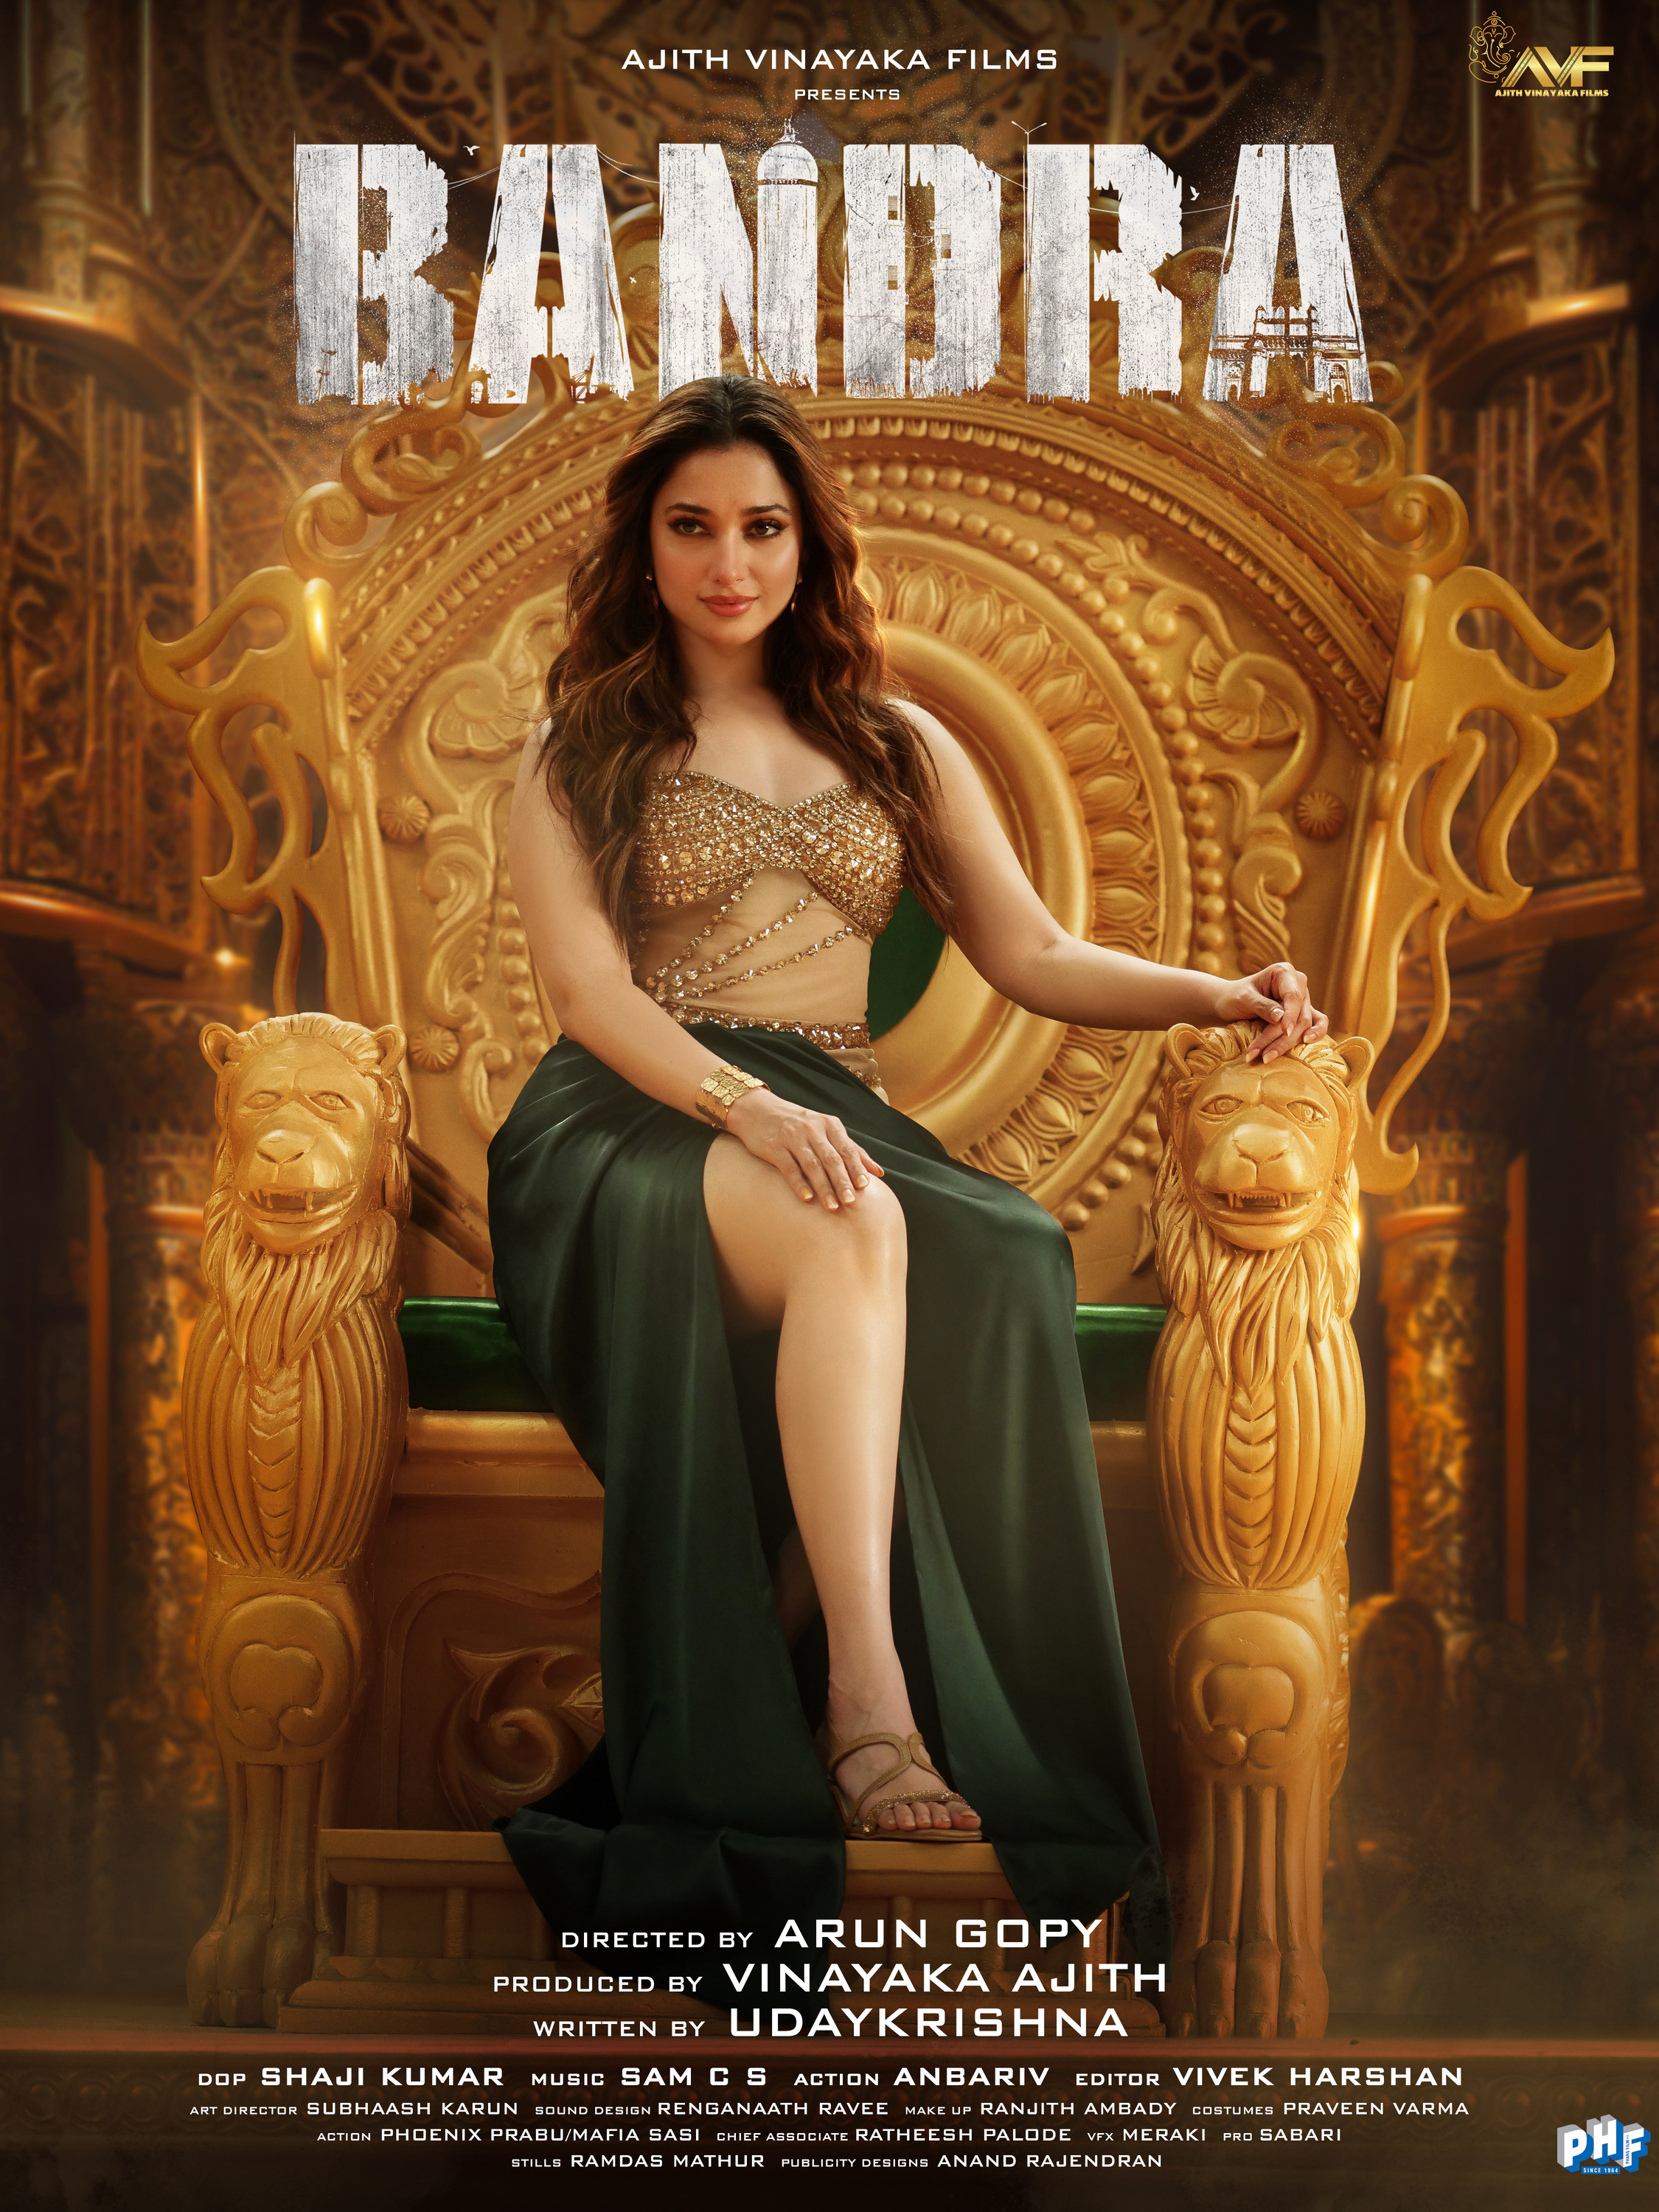 Mega Sized Movie Poster Image for Bandra (#11 of 11)